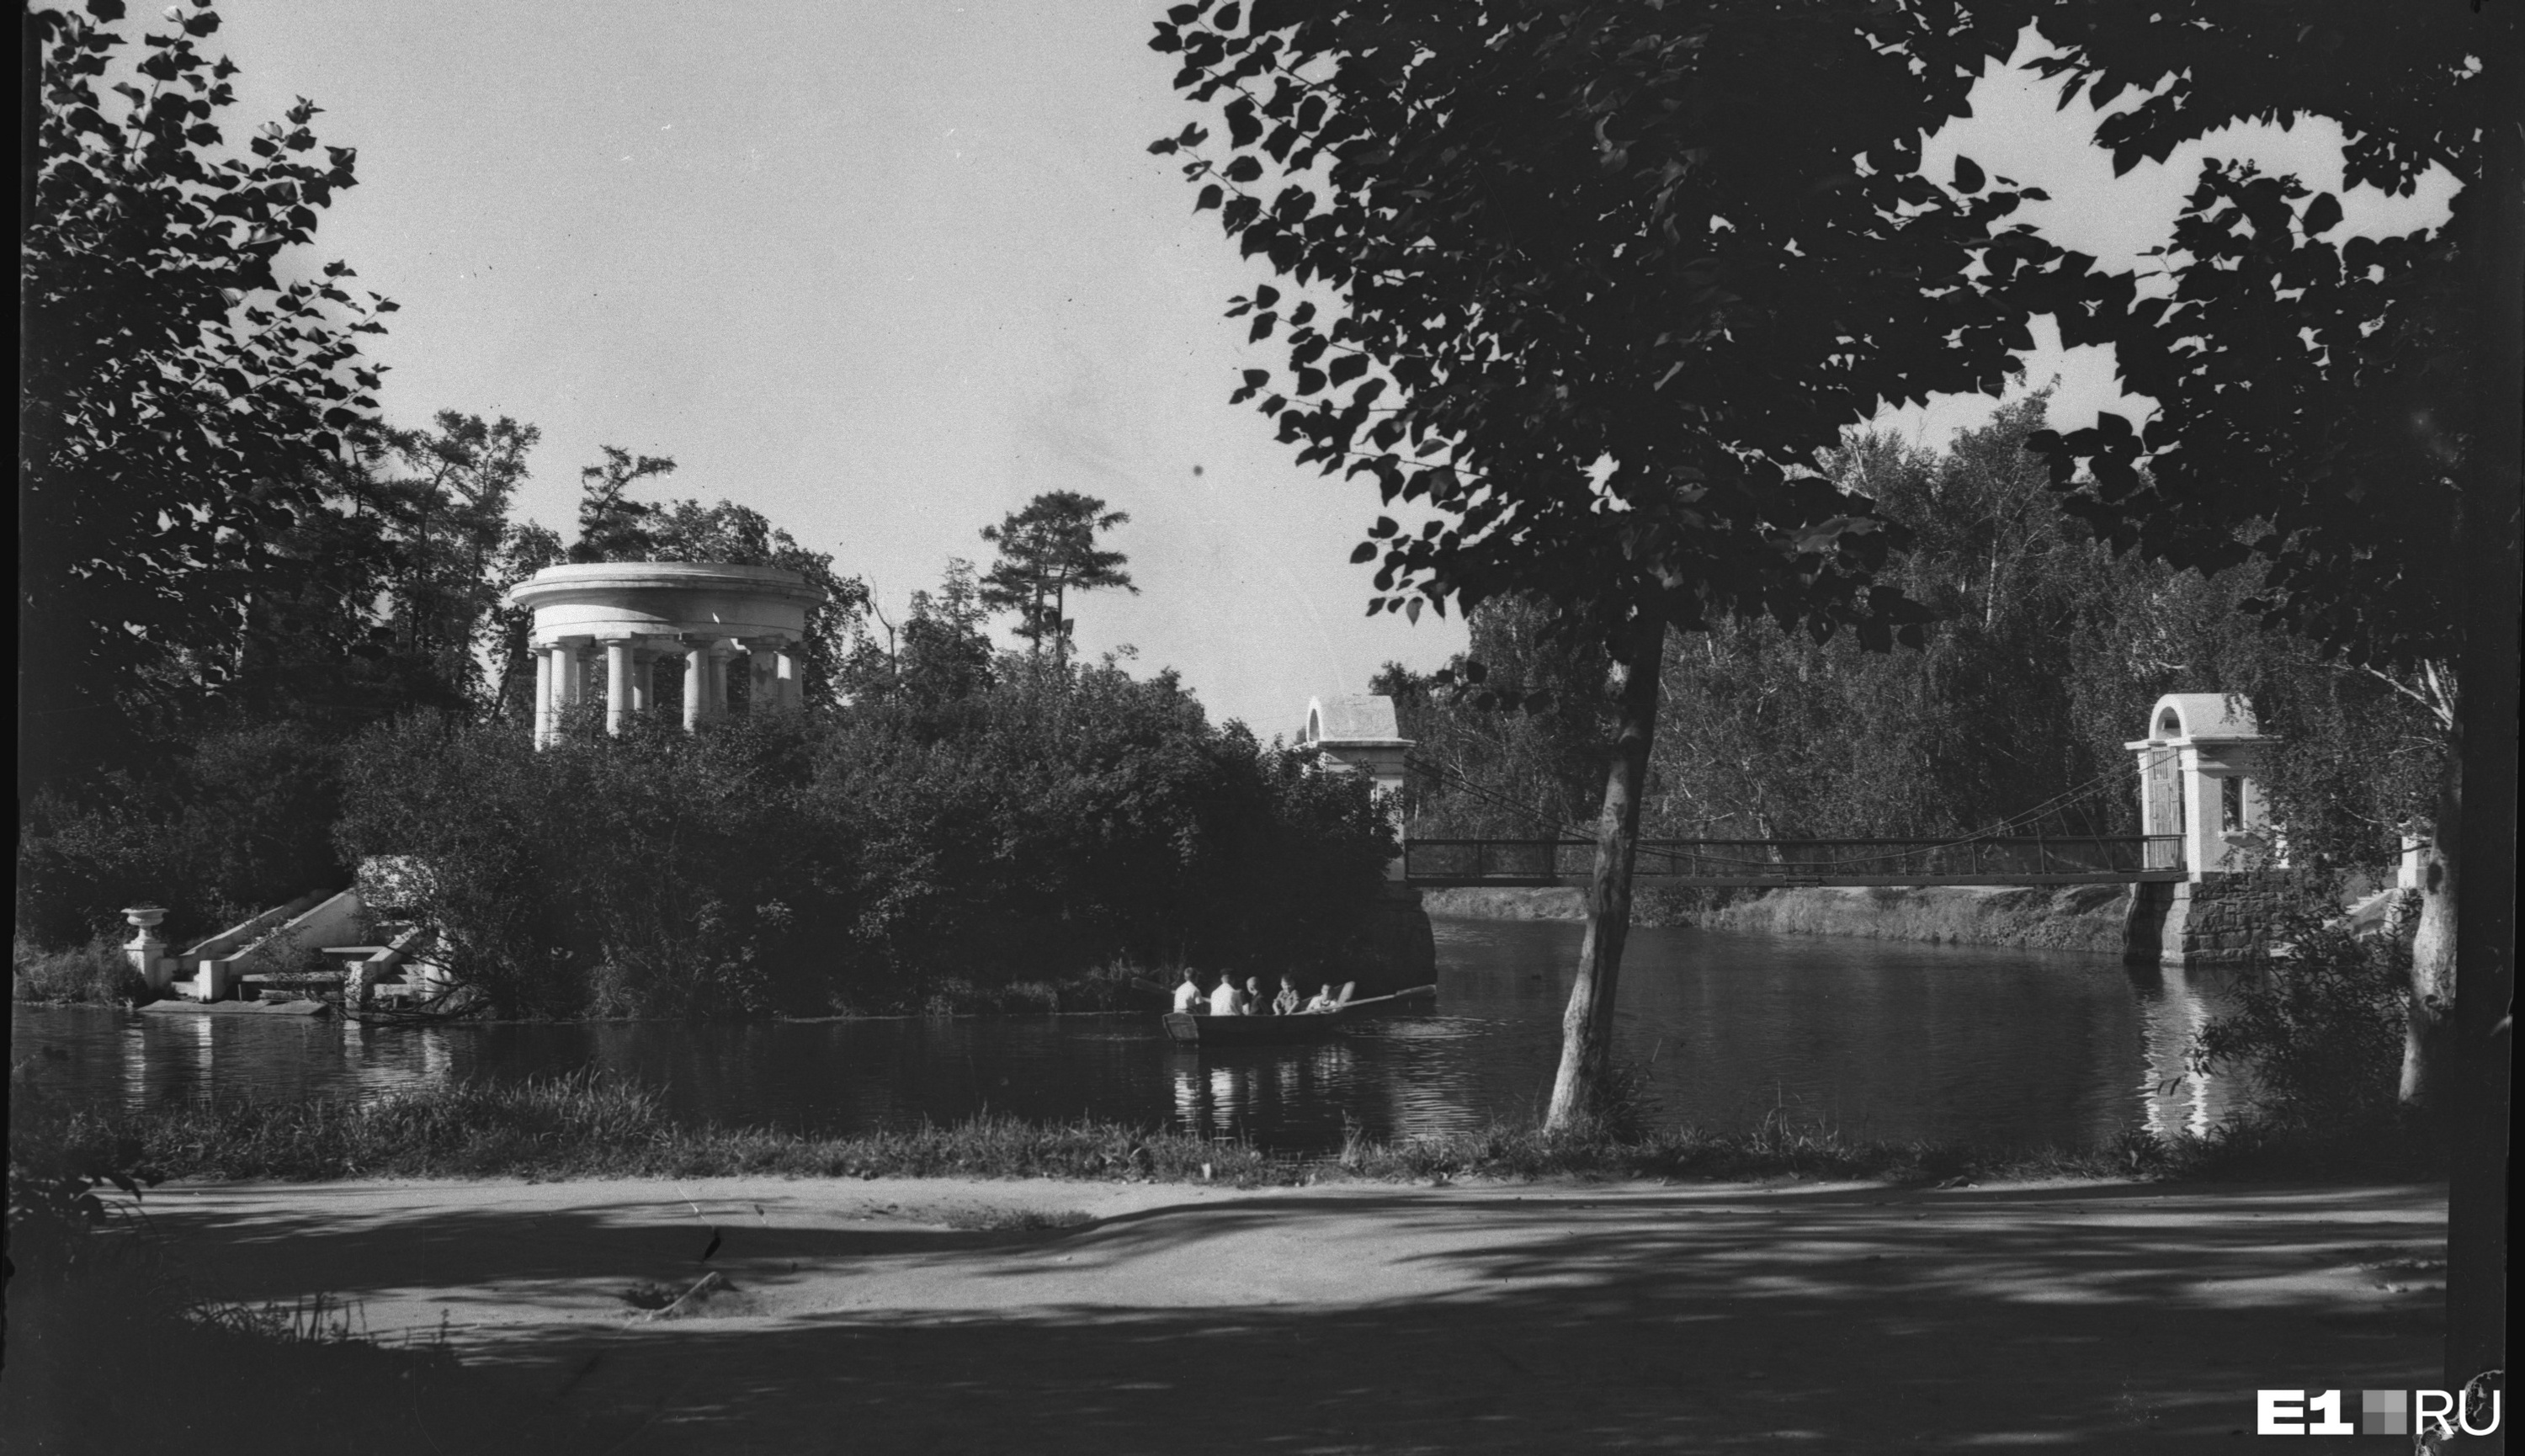 Пруд в парке Дворца пионеров. 1948
год